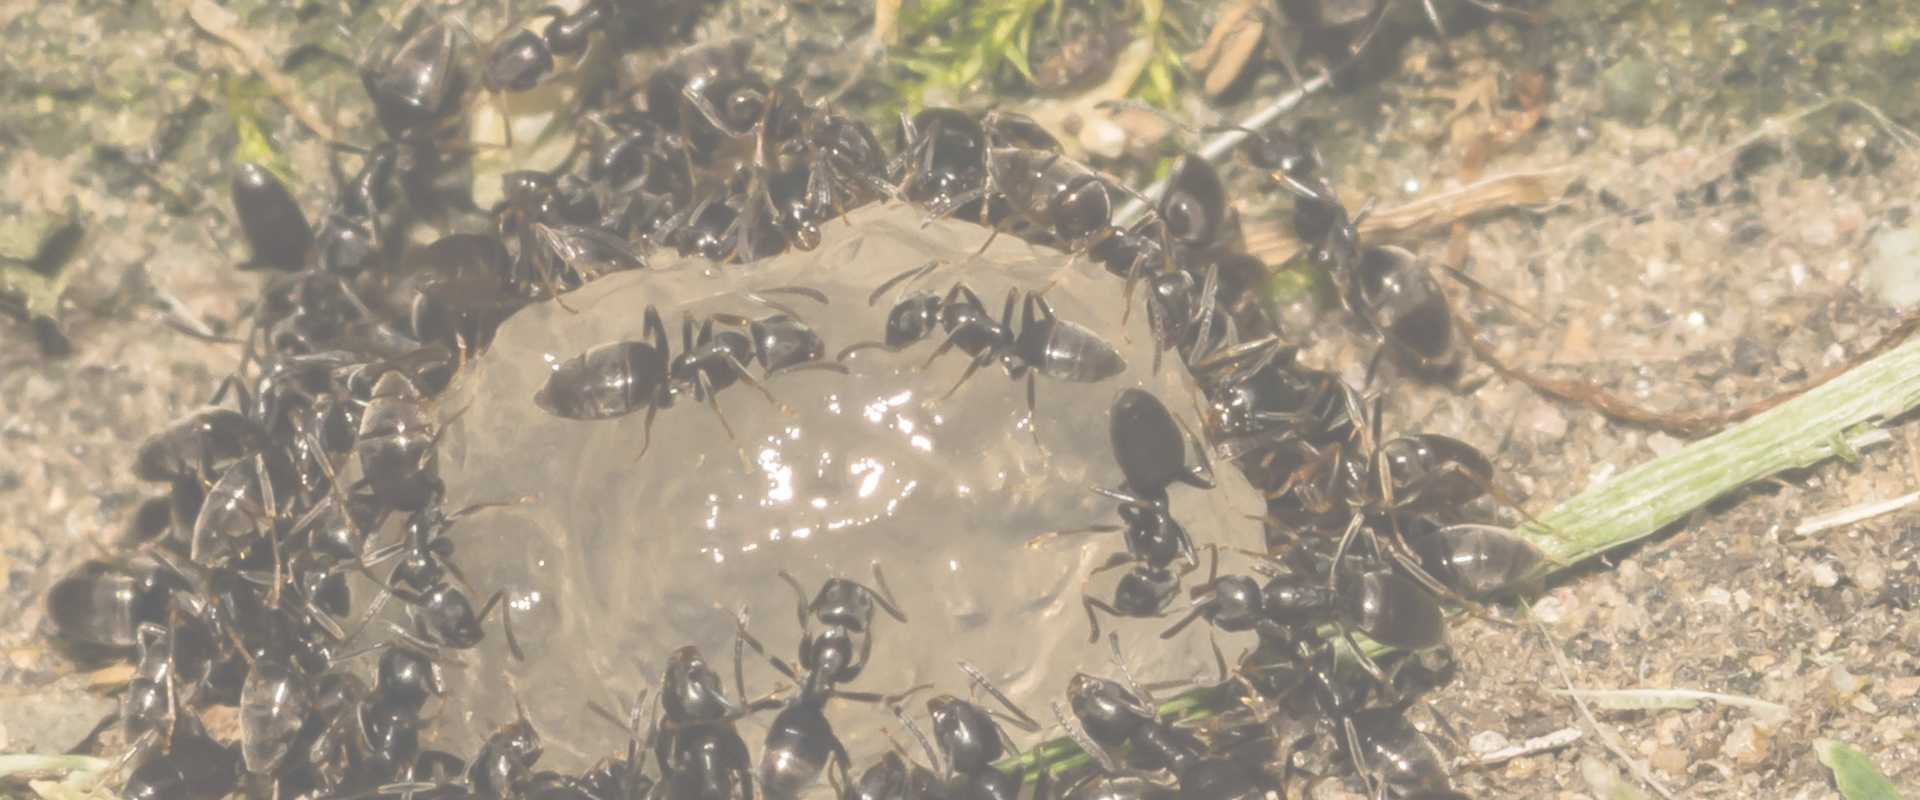 odorous house ants